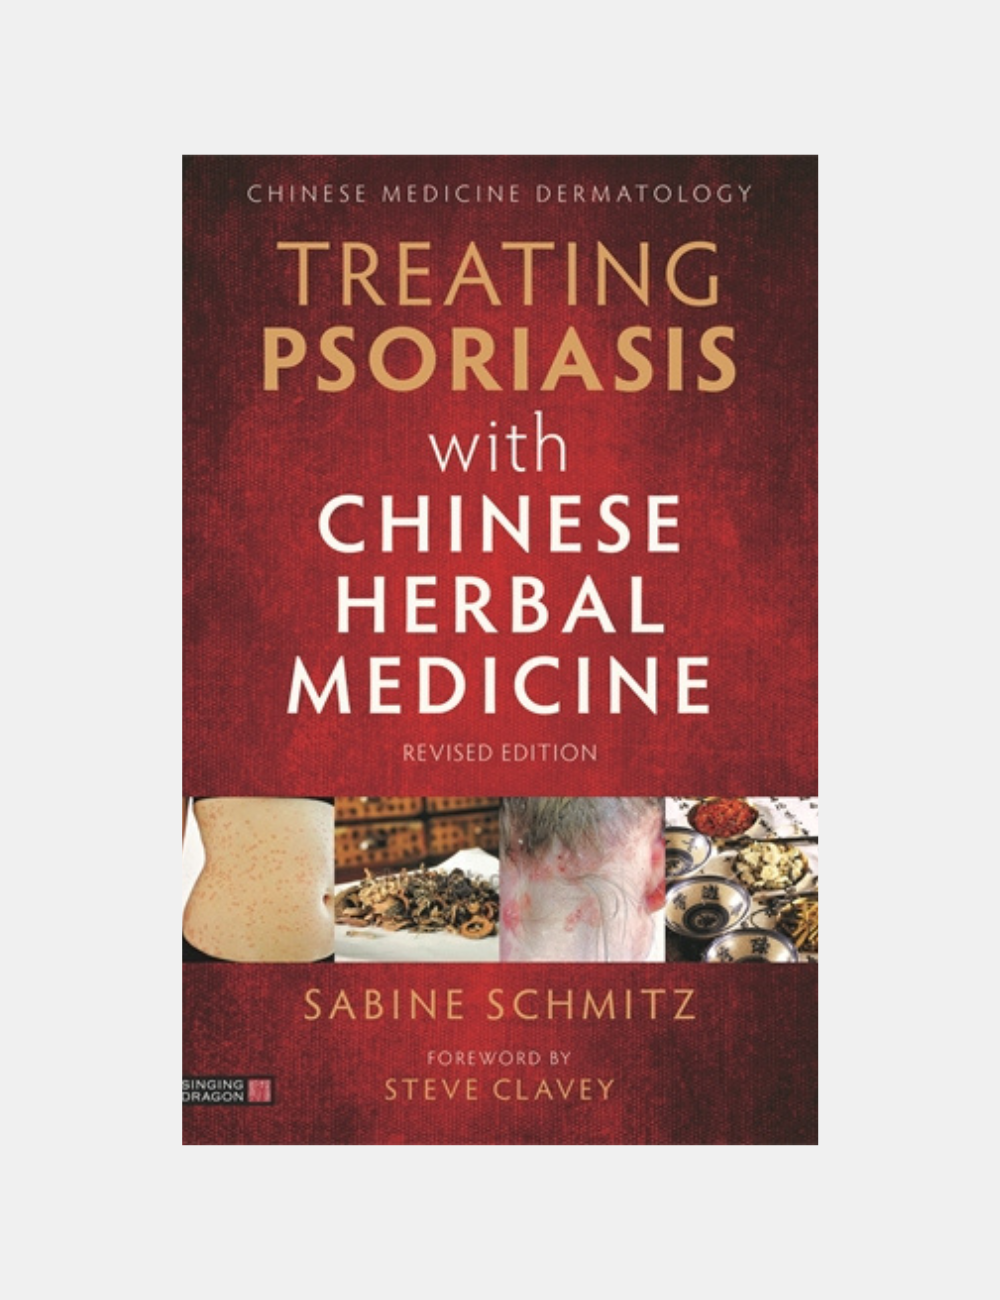 Chinese Medicine Dermatology Handbook Series